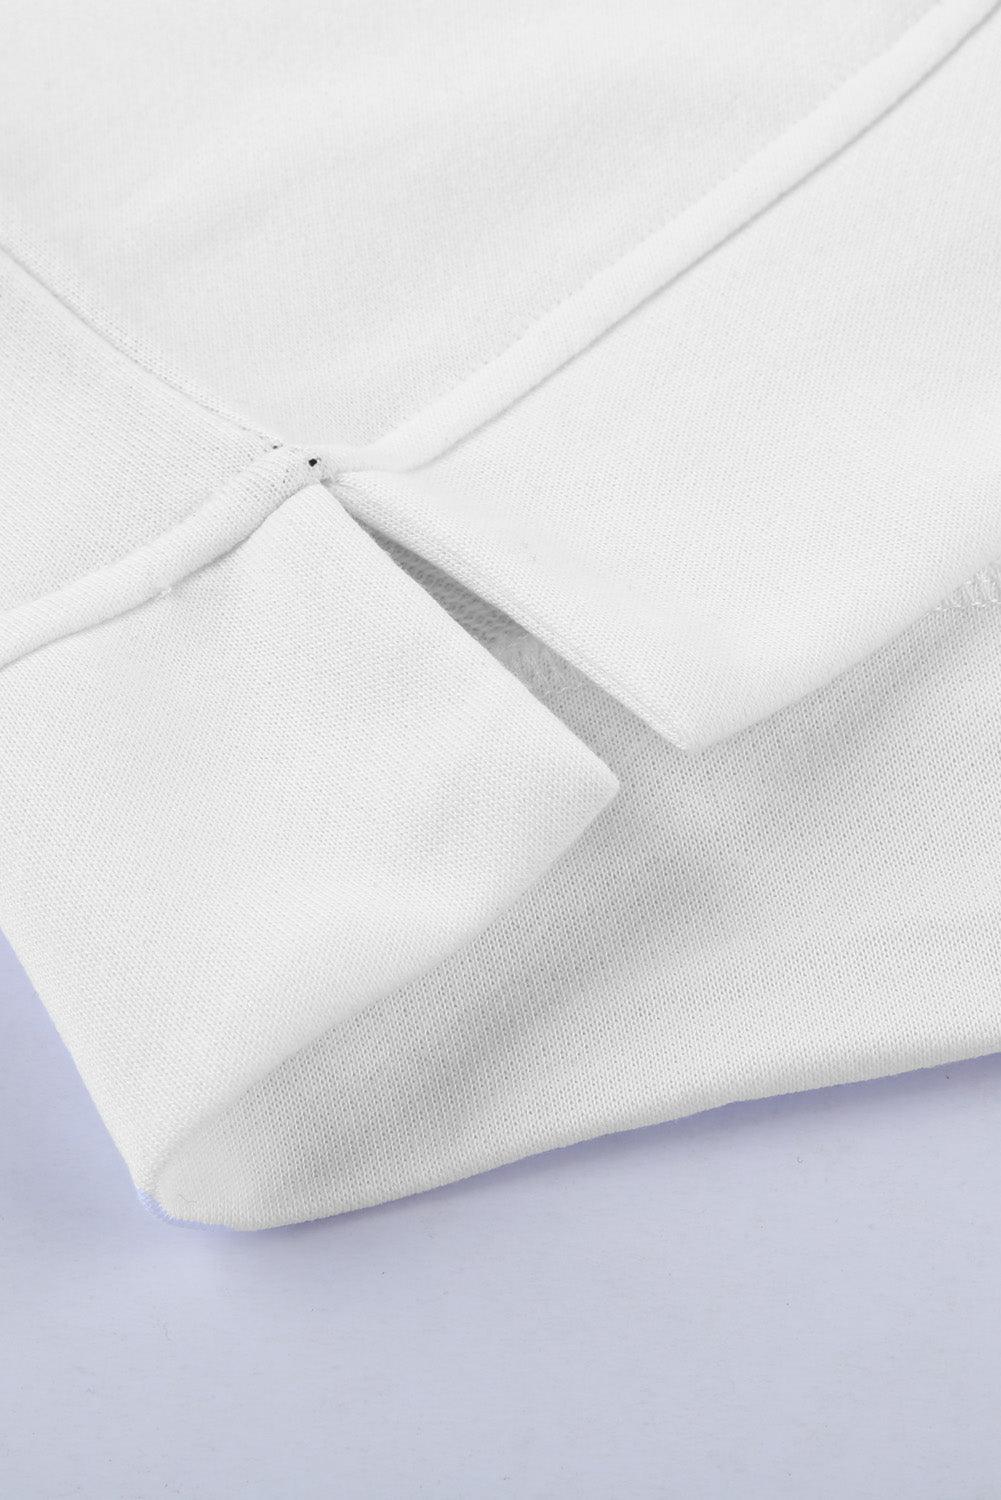 Black White Patchwork Dropped Shoulder Sleeve Sweatshirt - VirtuousWares:Global